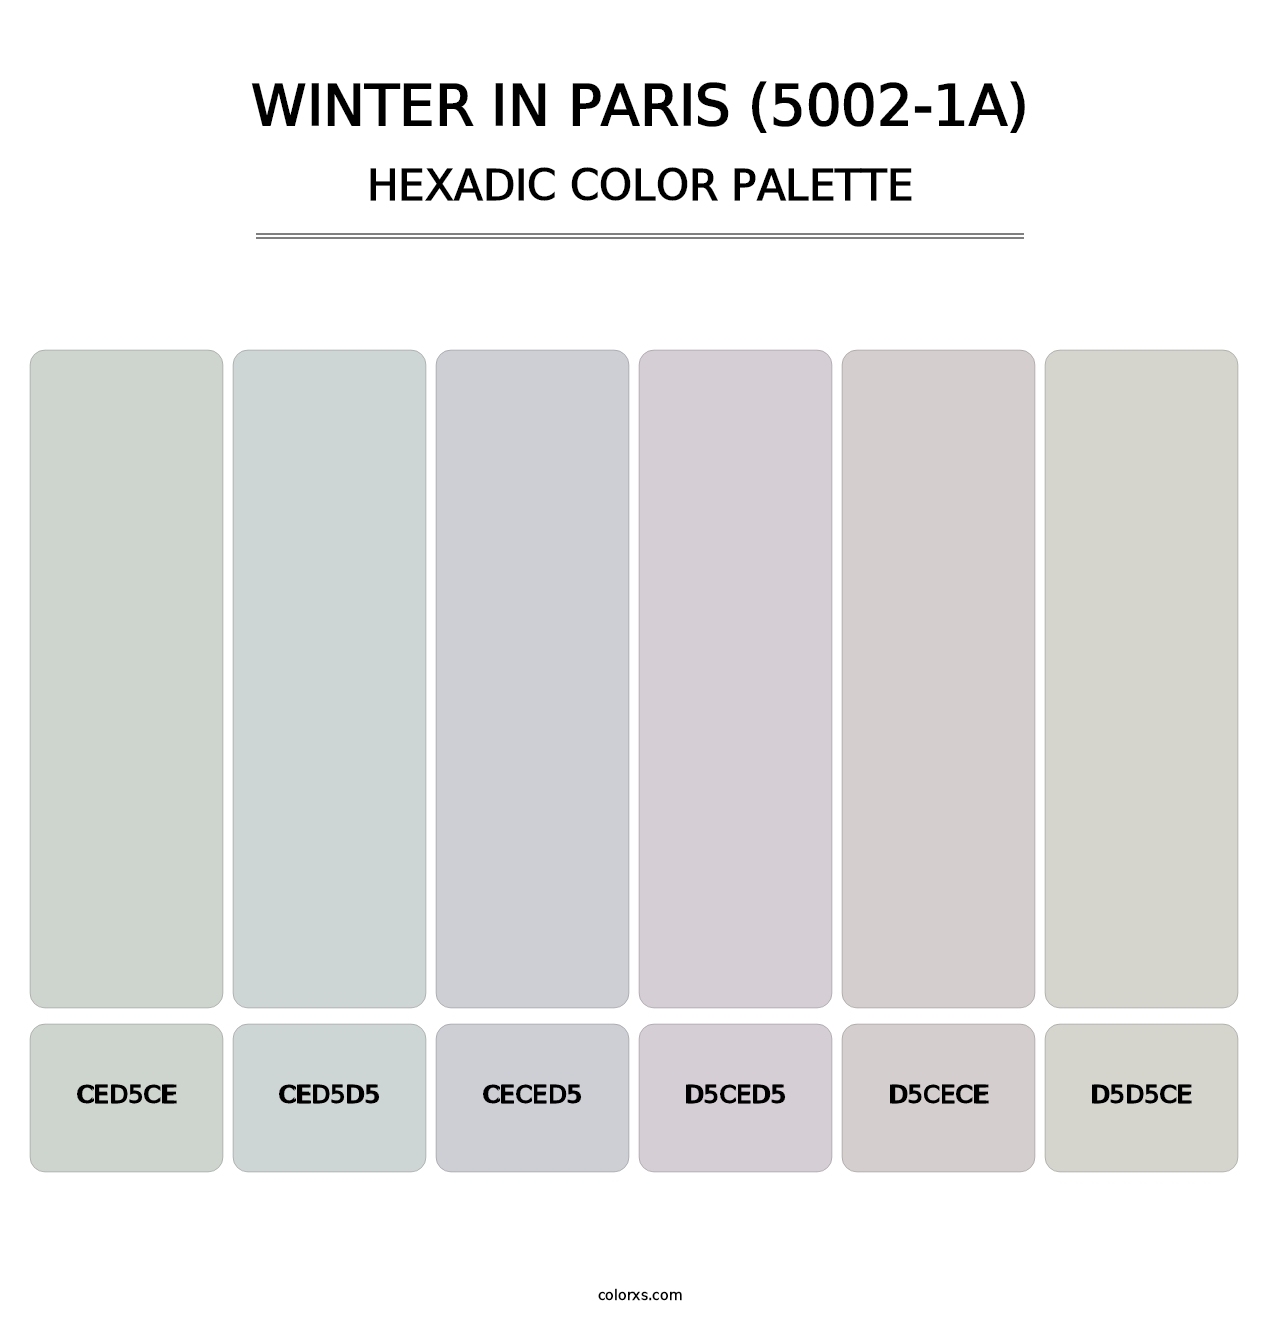 Winter in Paris (5002-1A) - Hexadic Color Palette